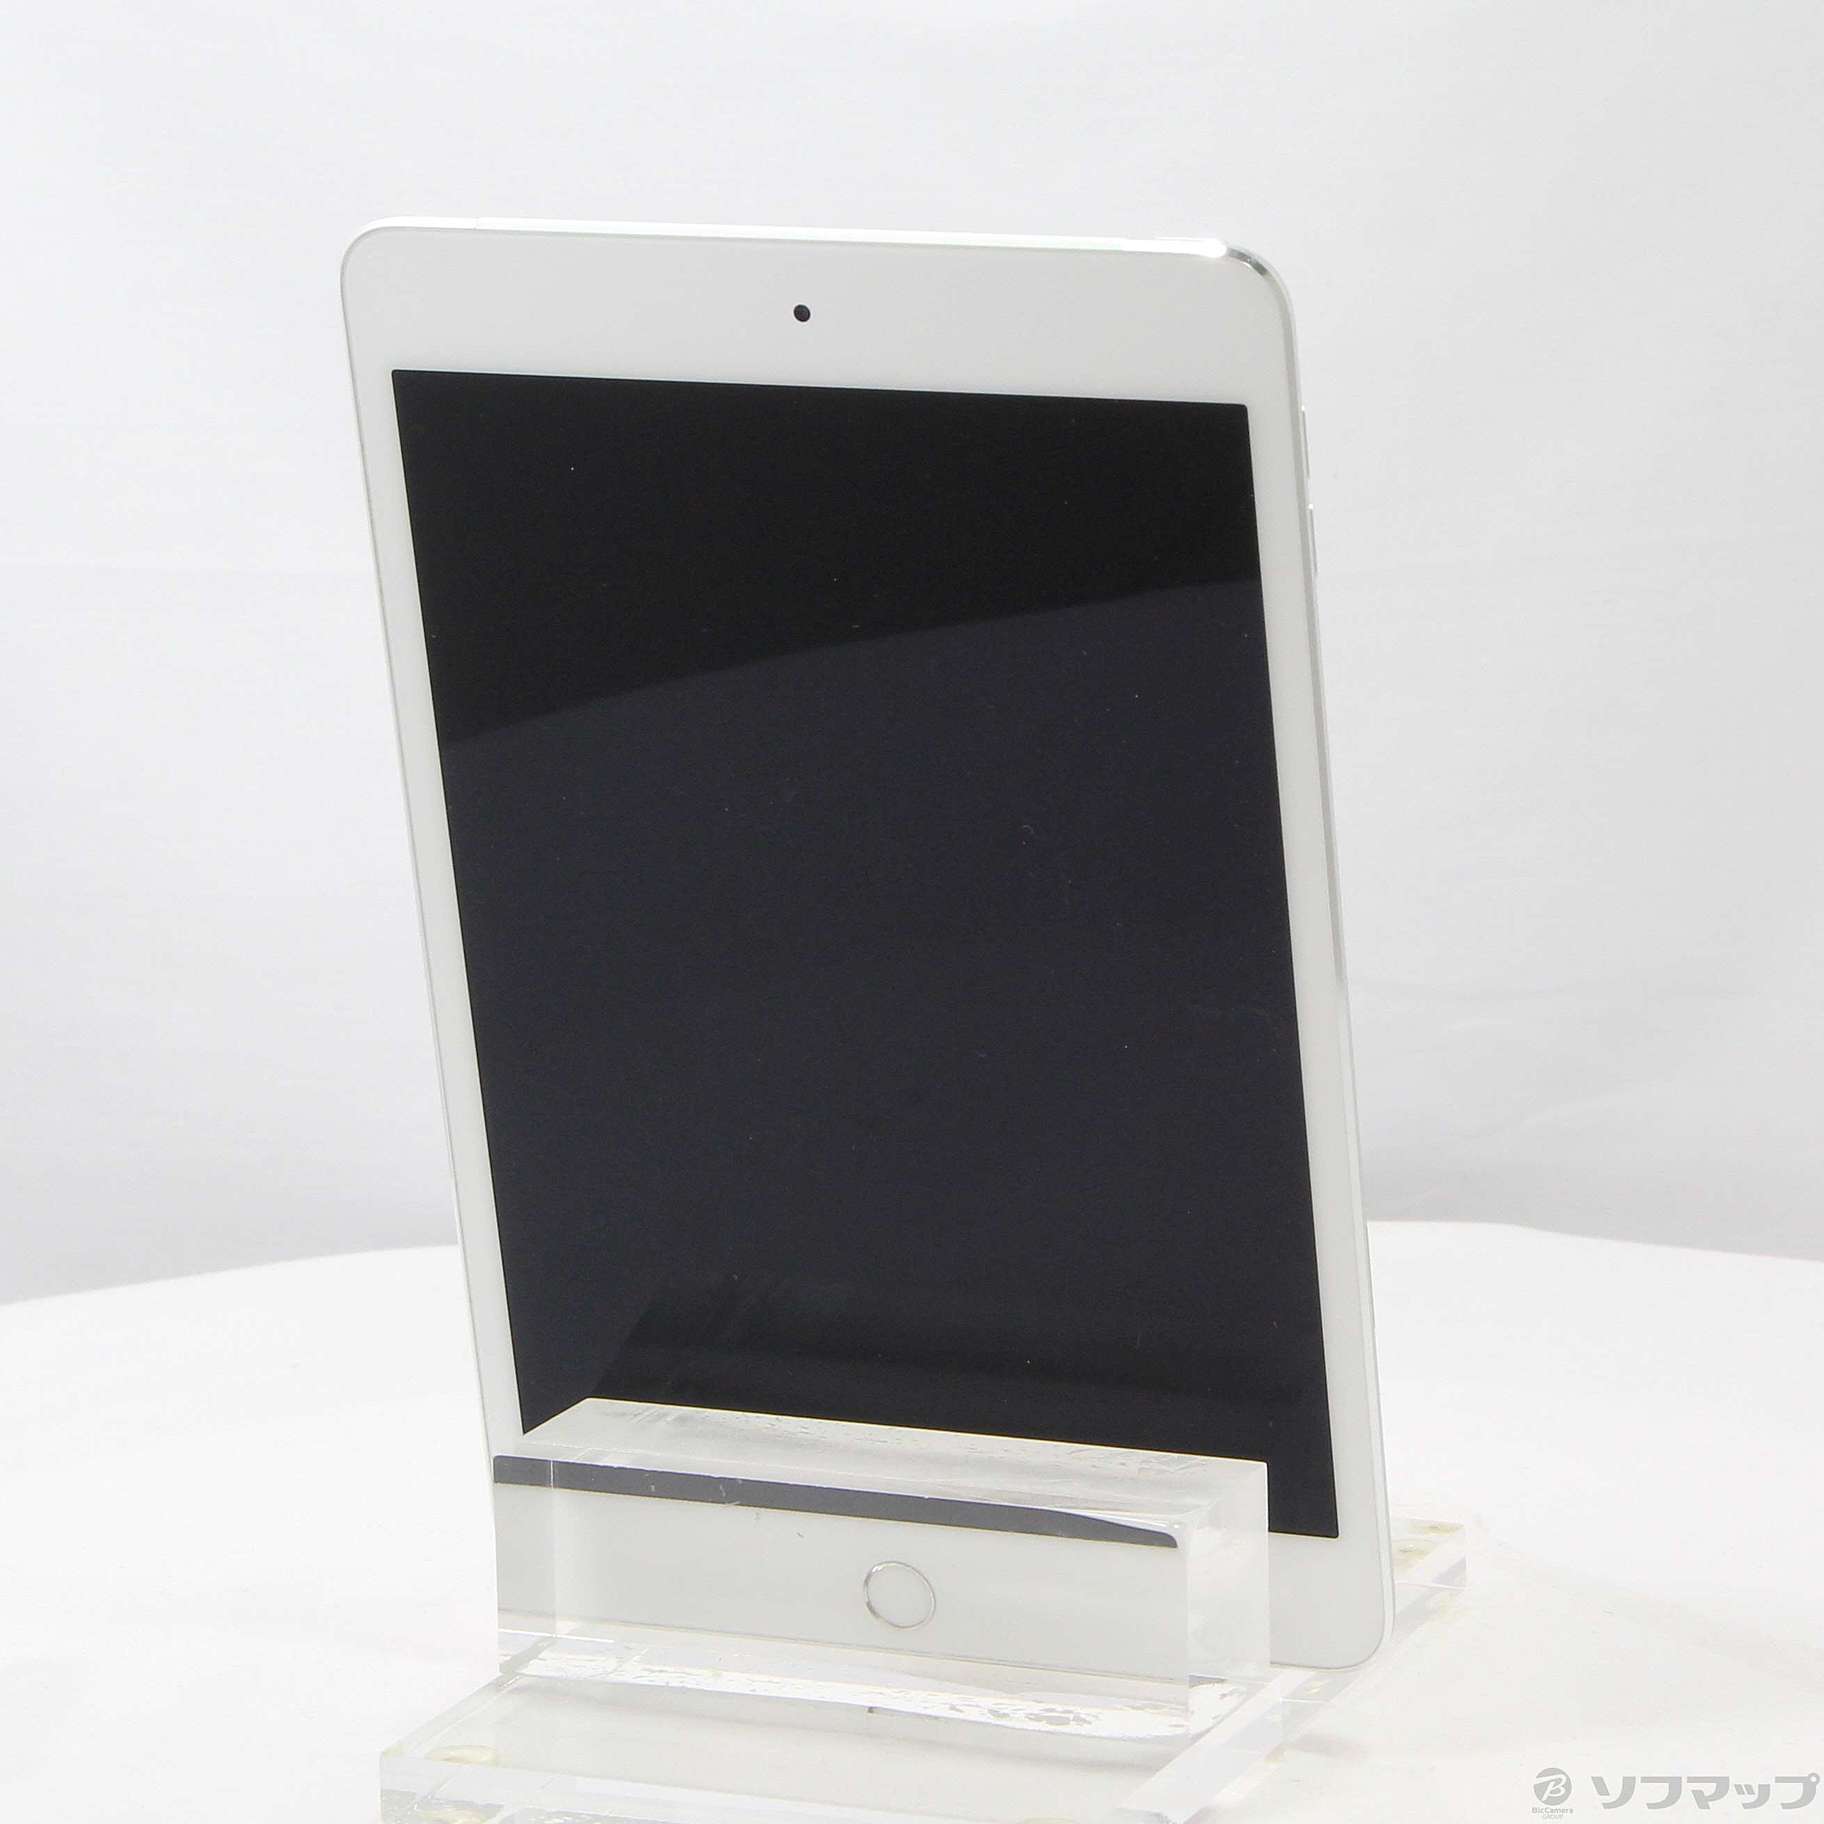 【特価最新作】SoftBank MK772J/A iPad mini 4 Wi-Fi+Cellular 128GB ゴールド SB iPad本体